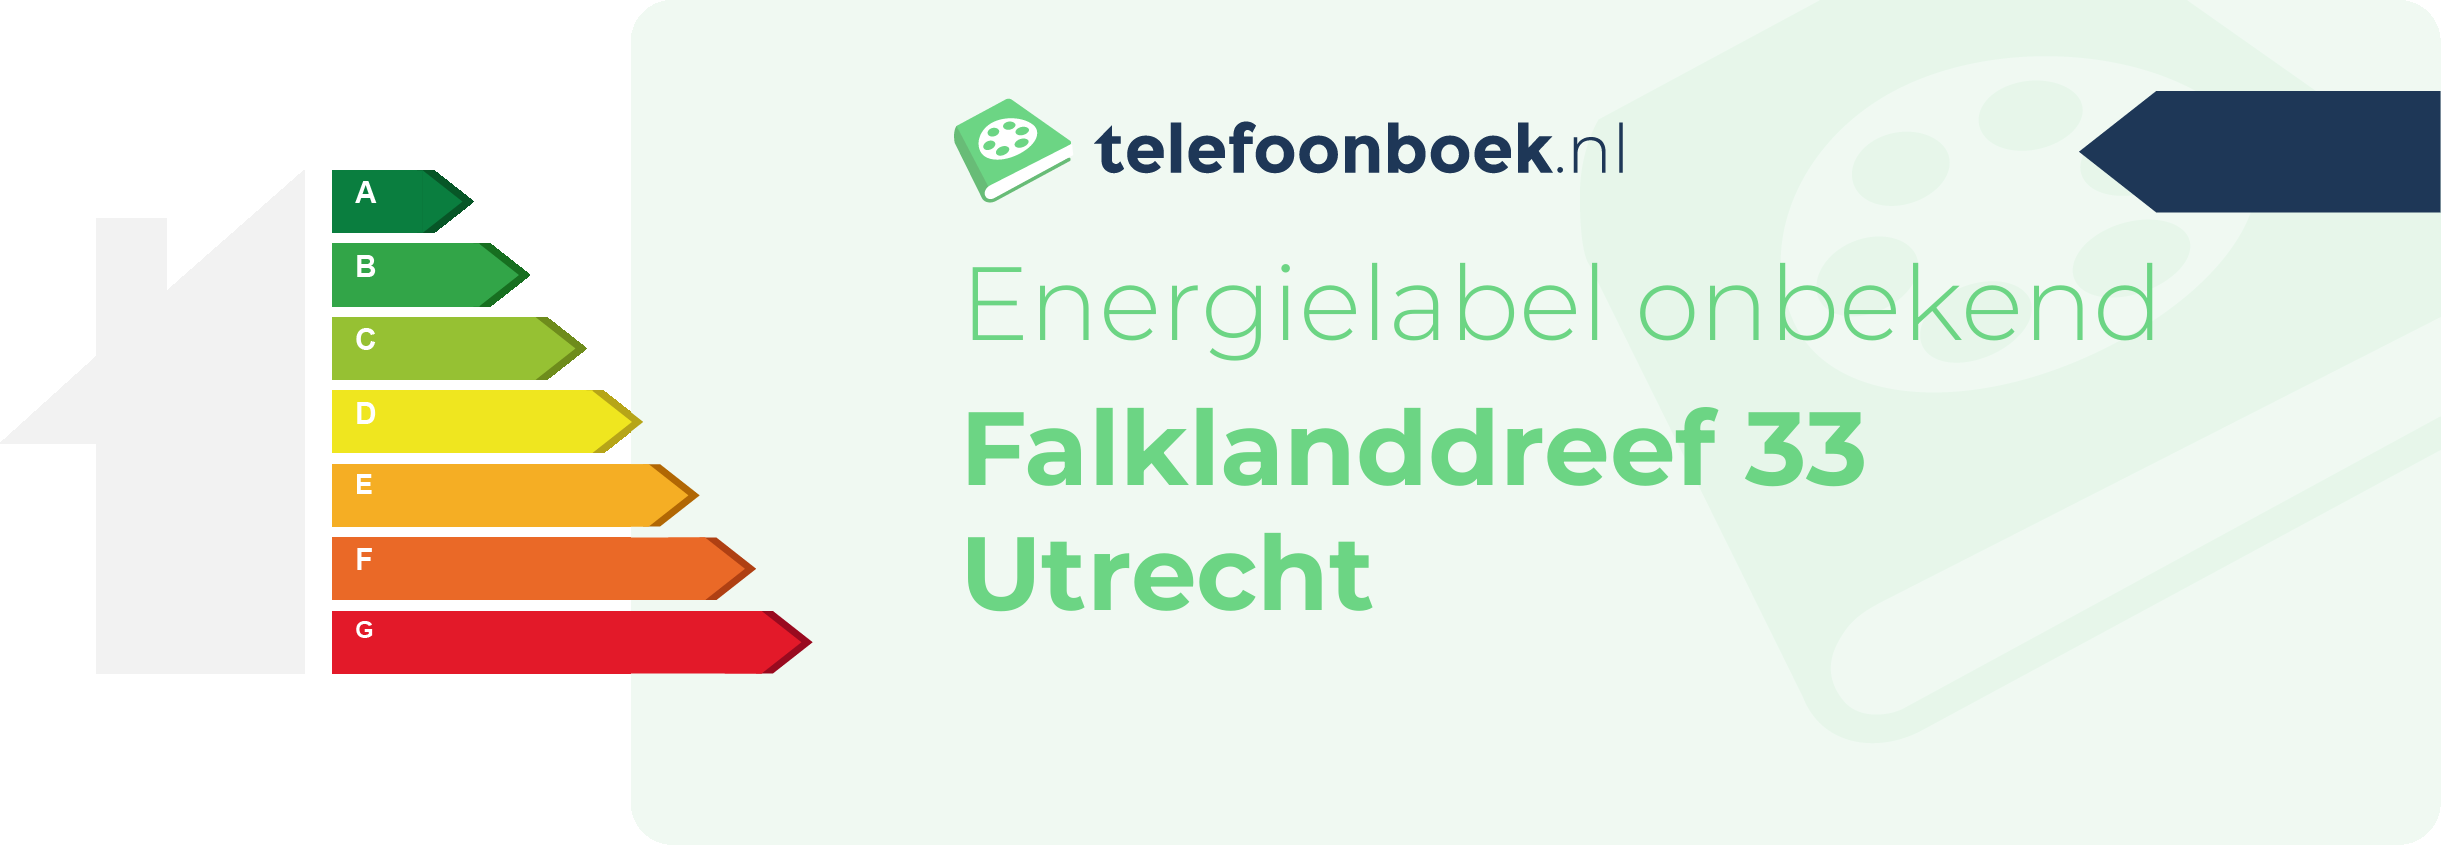 Energielabel Falklanddreef 33 Utrecht